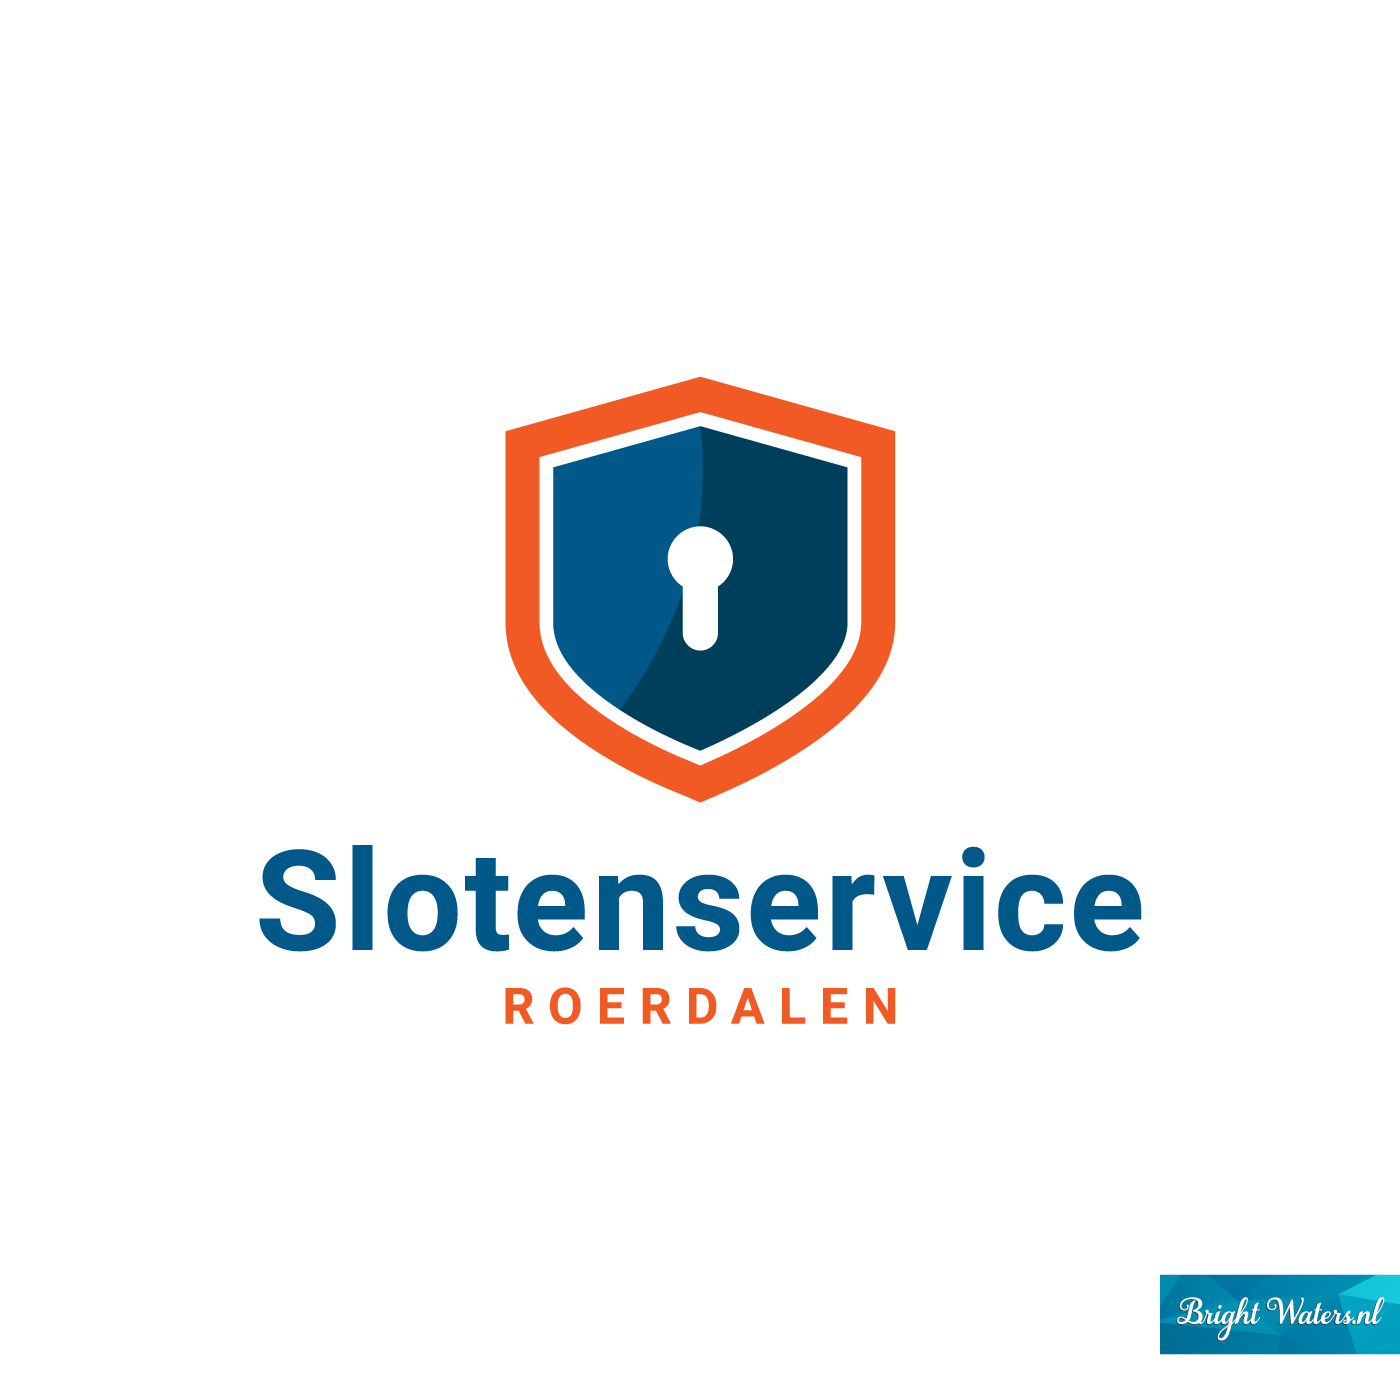 Slotenservice Roerdalen - Logo.